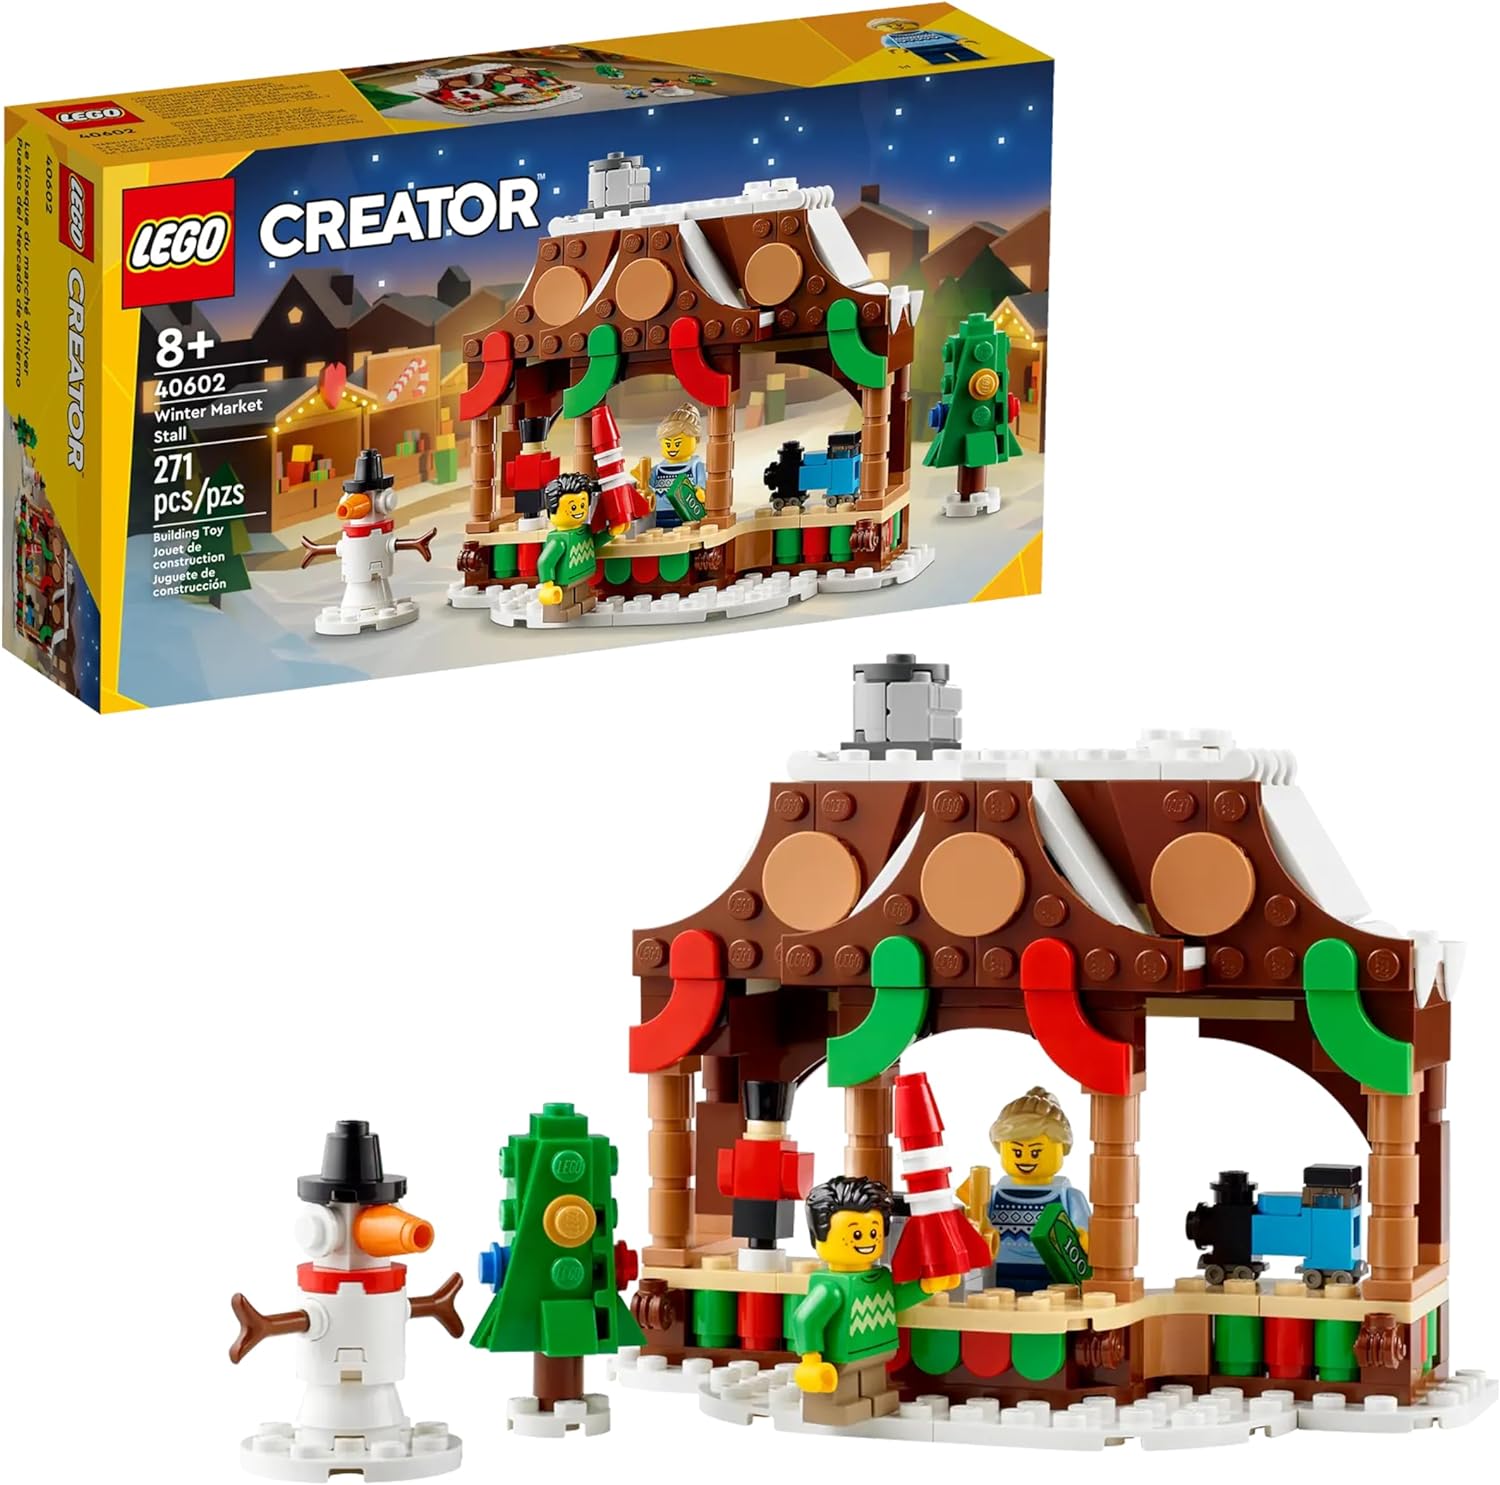 LEGO 40602 Winter Market Stall GWP (271 pcs)